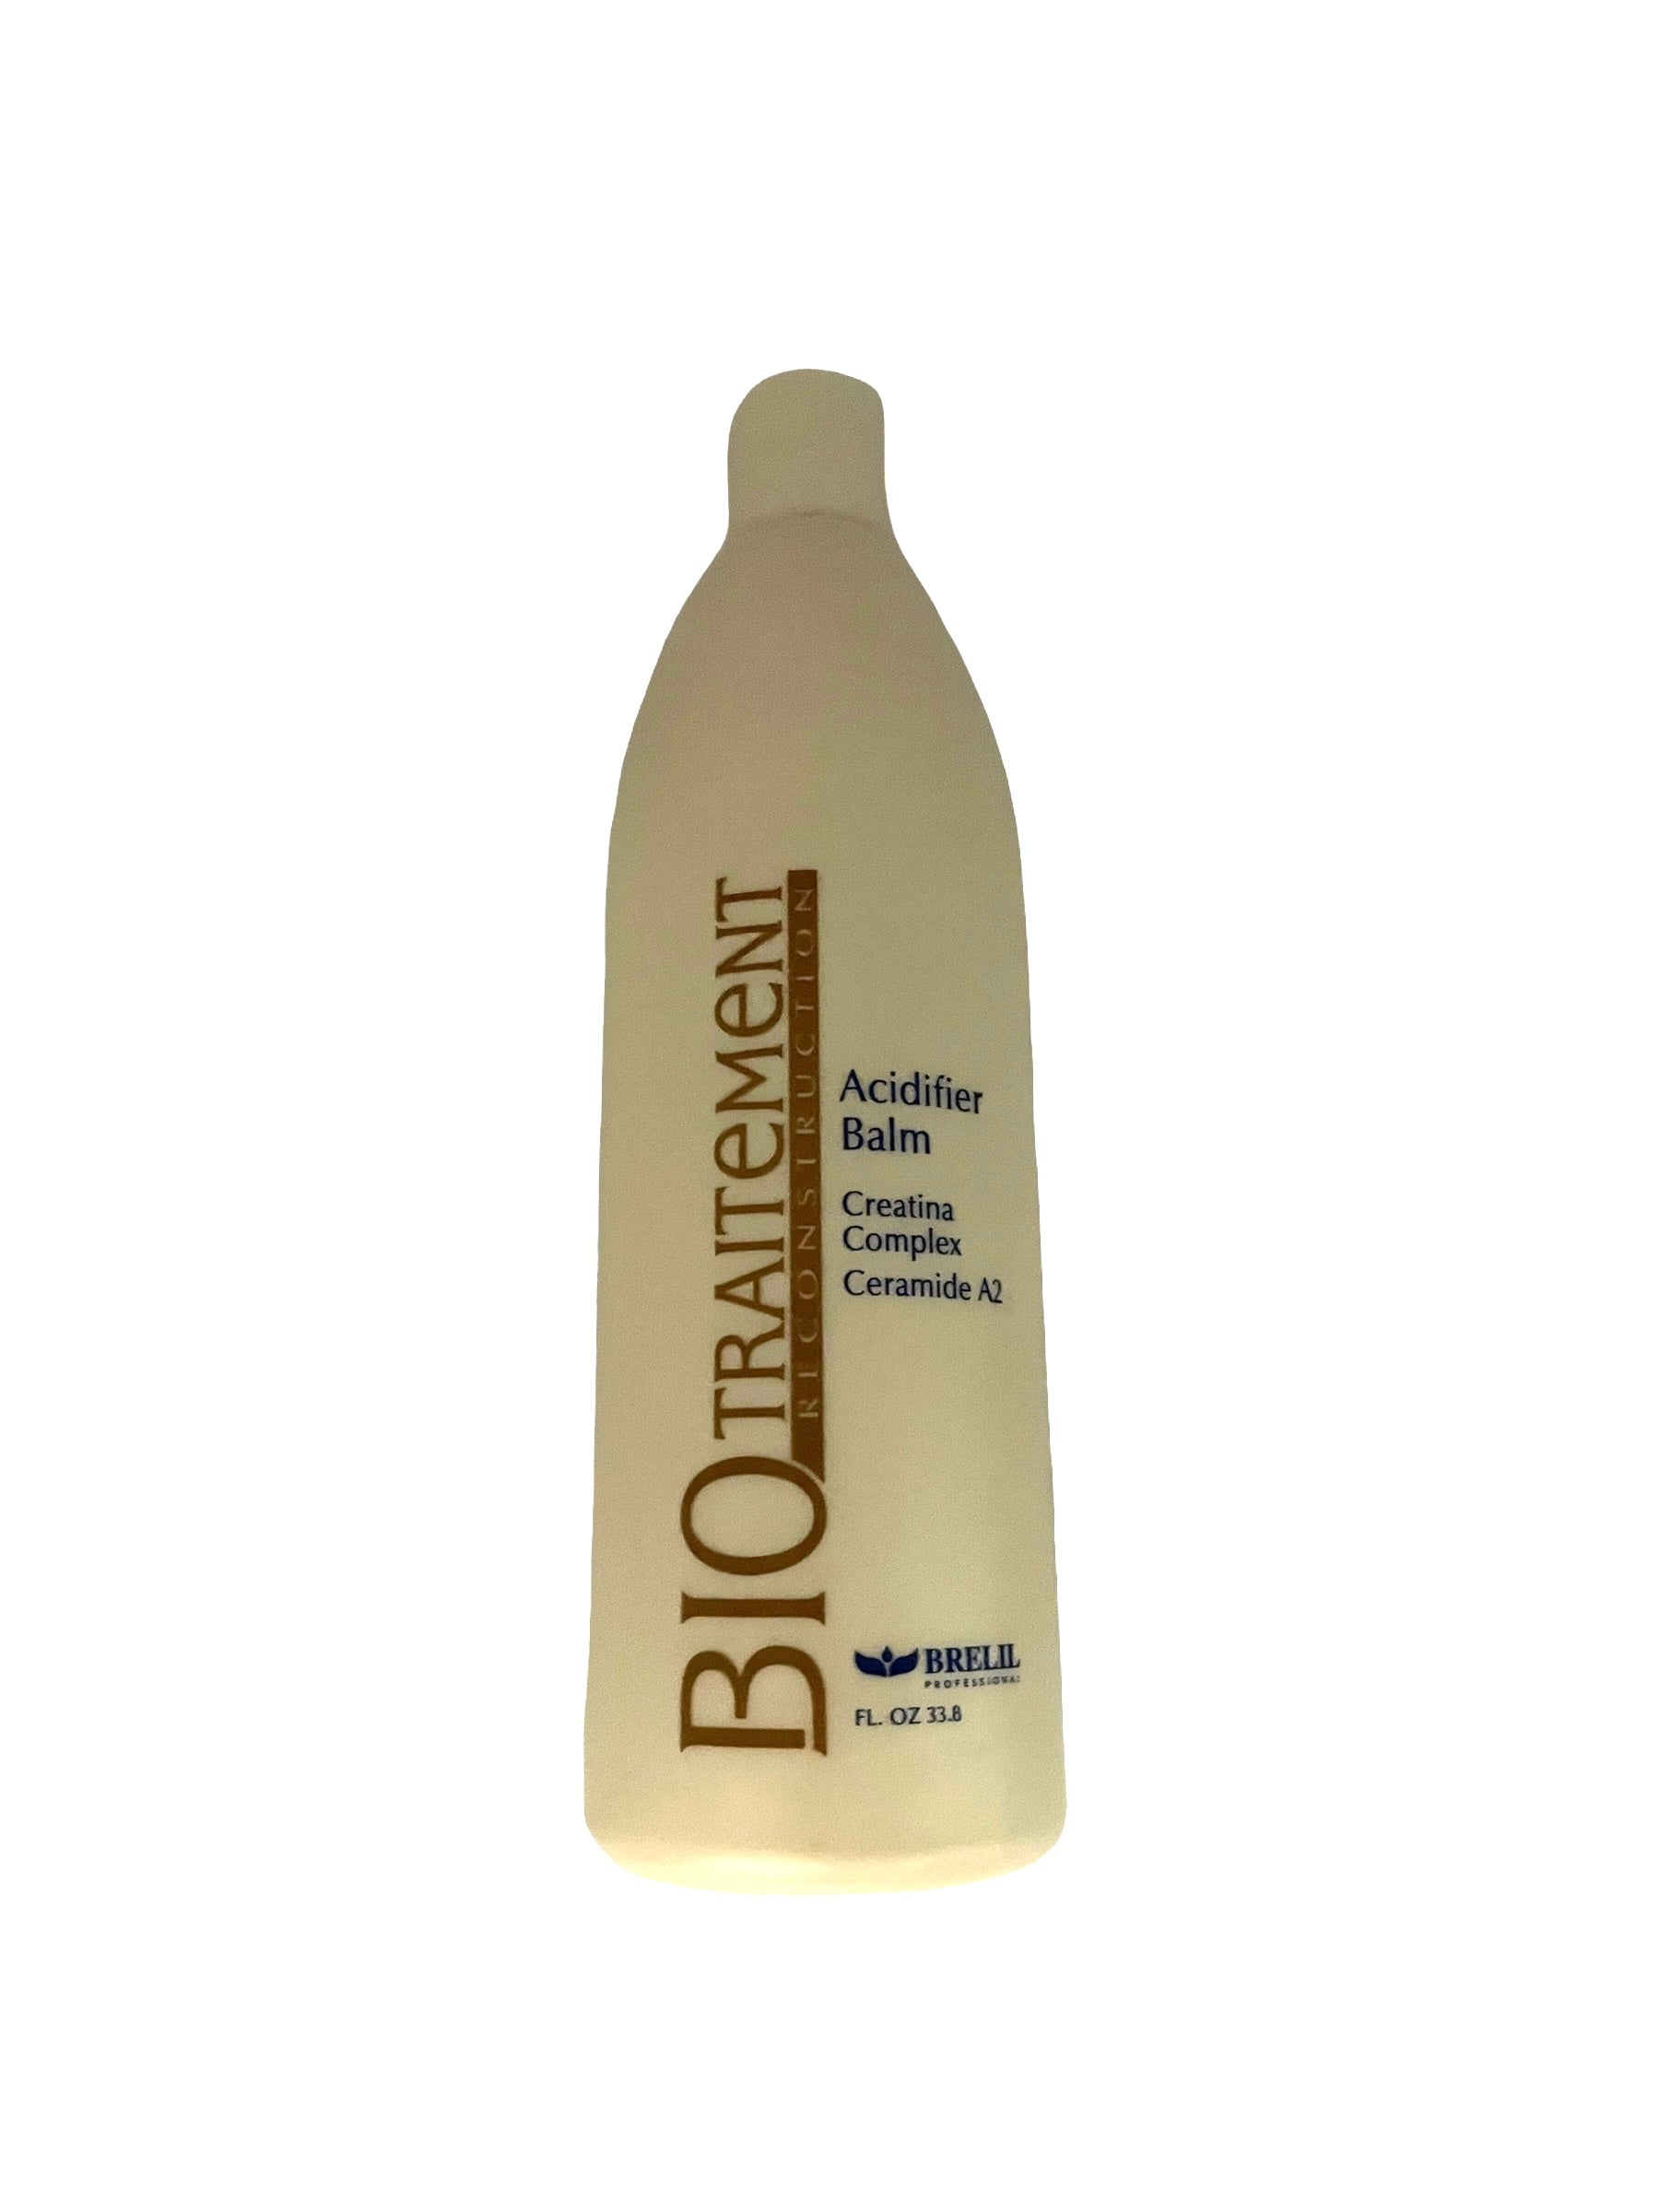 Brelil Bio Treatment Acidifier Balm With Keratin Complex Ceramide A2 33.8oz Hair Treatment